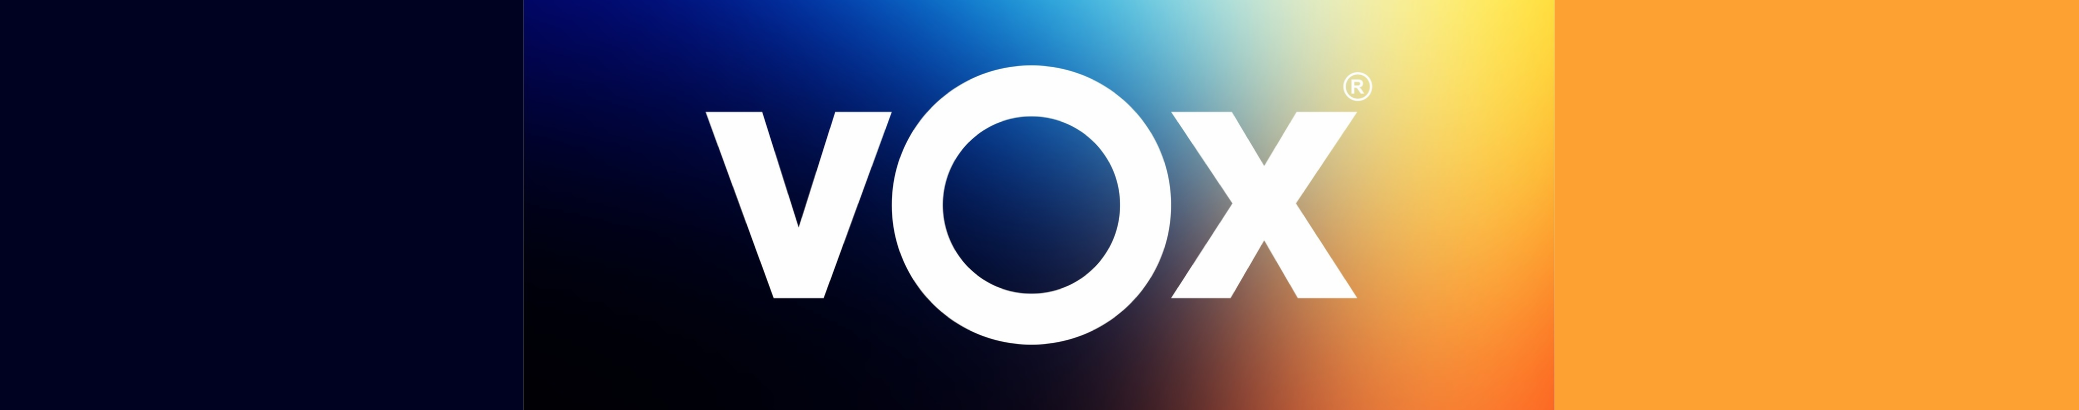 VOX Pluss profilbanner